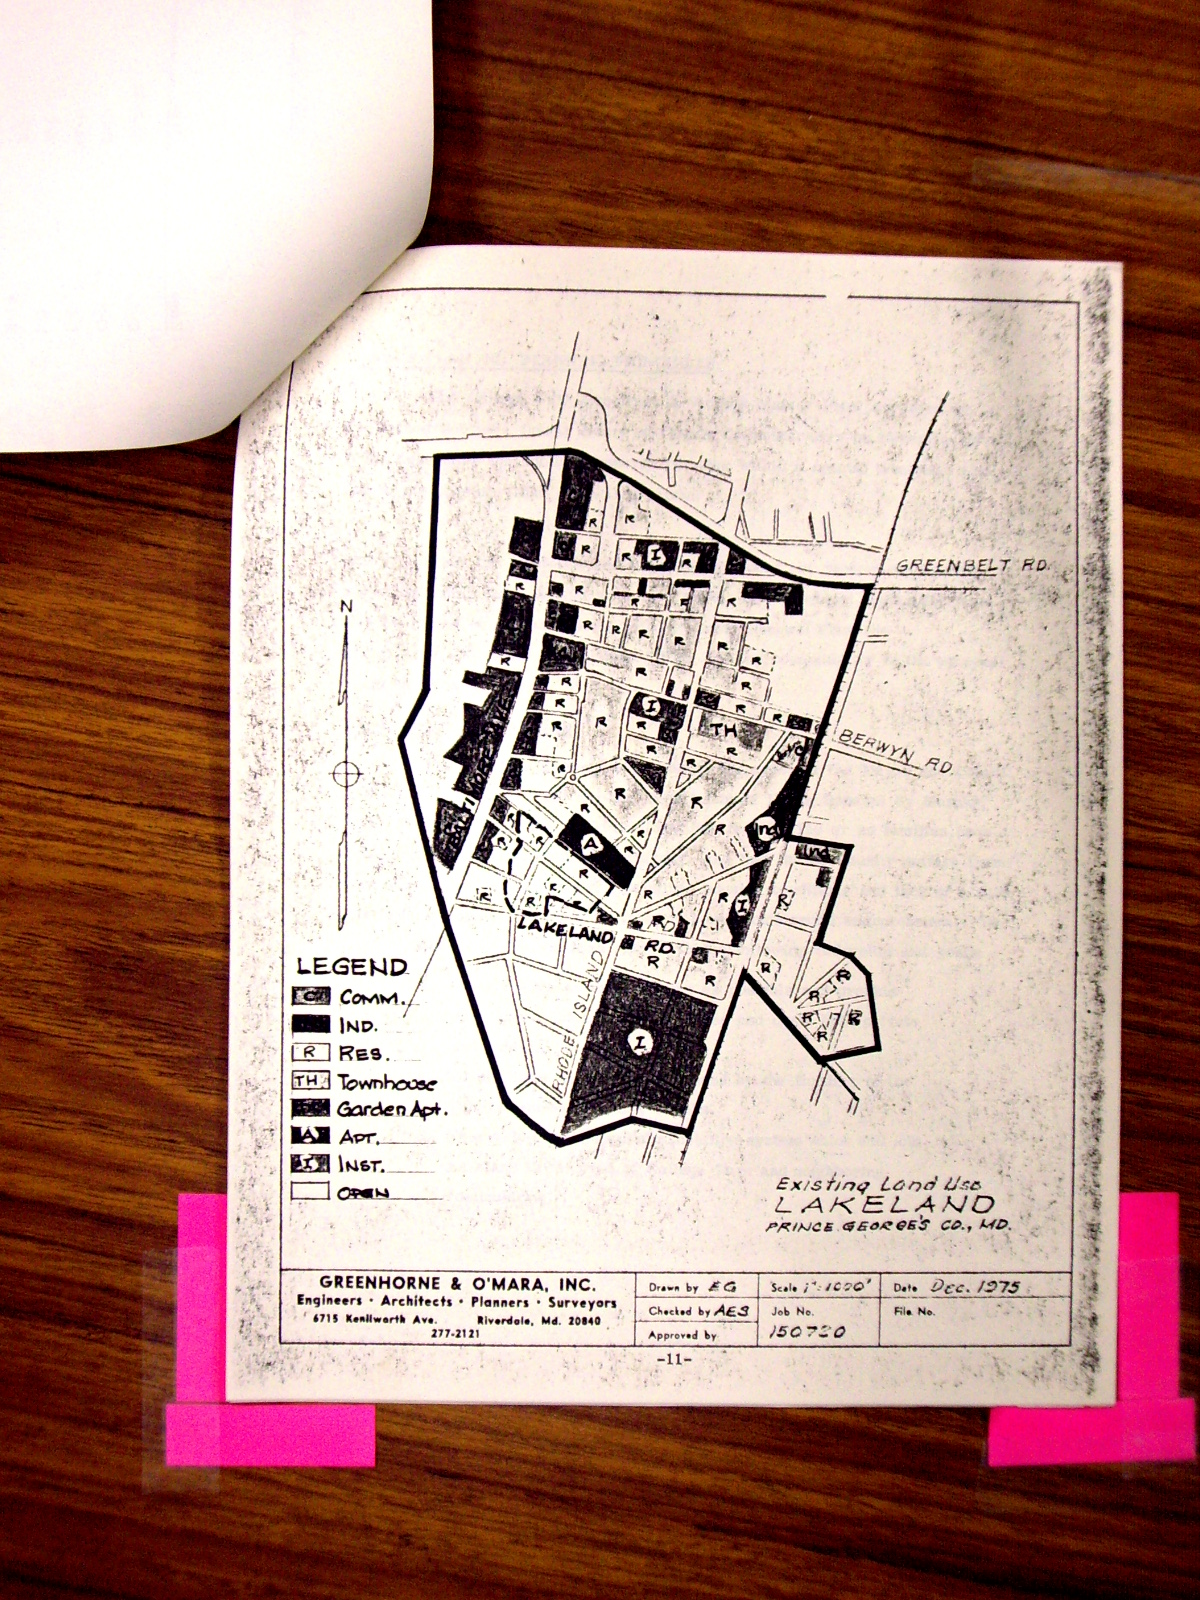 1978 Memorandum on Prince Georges County Zoning Map Amendments